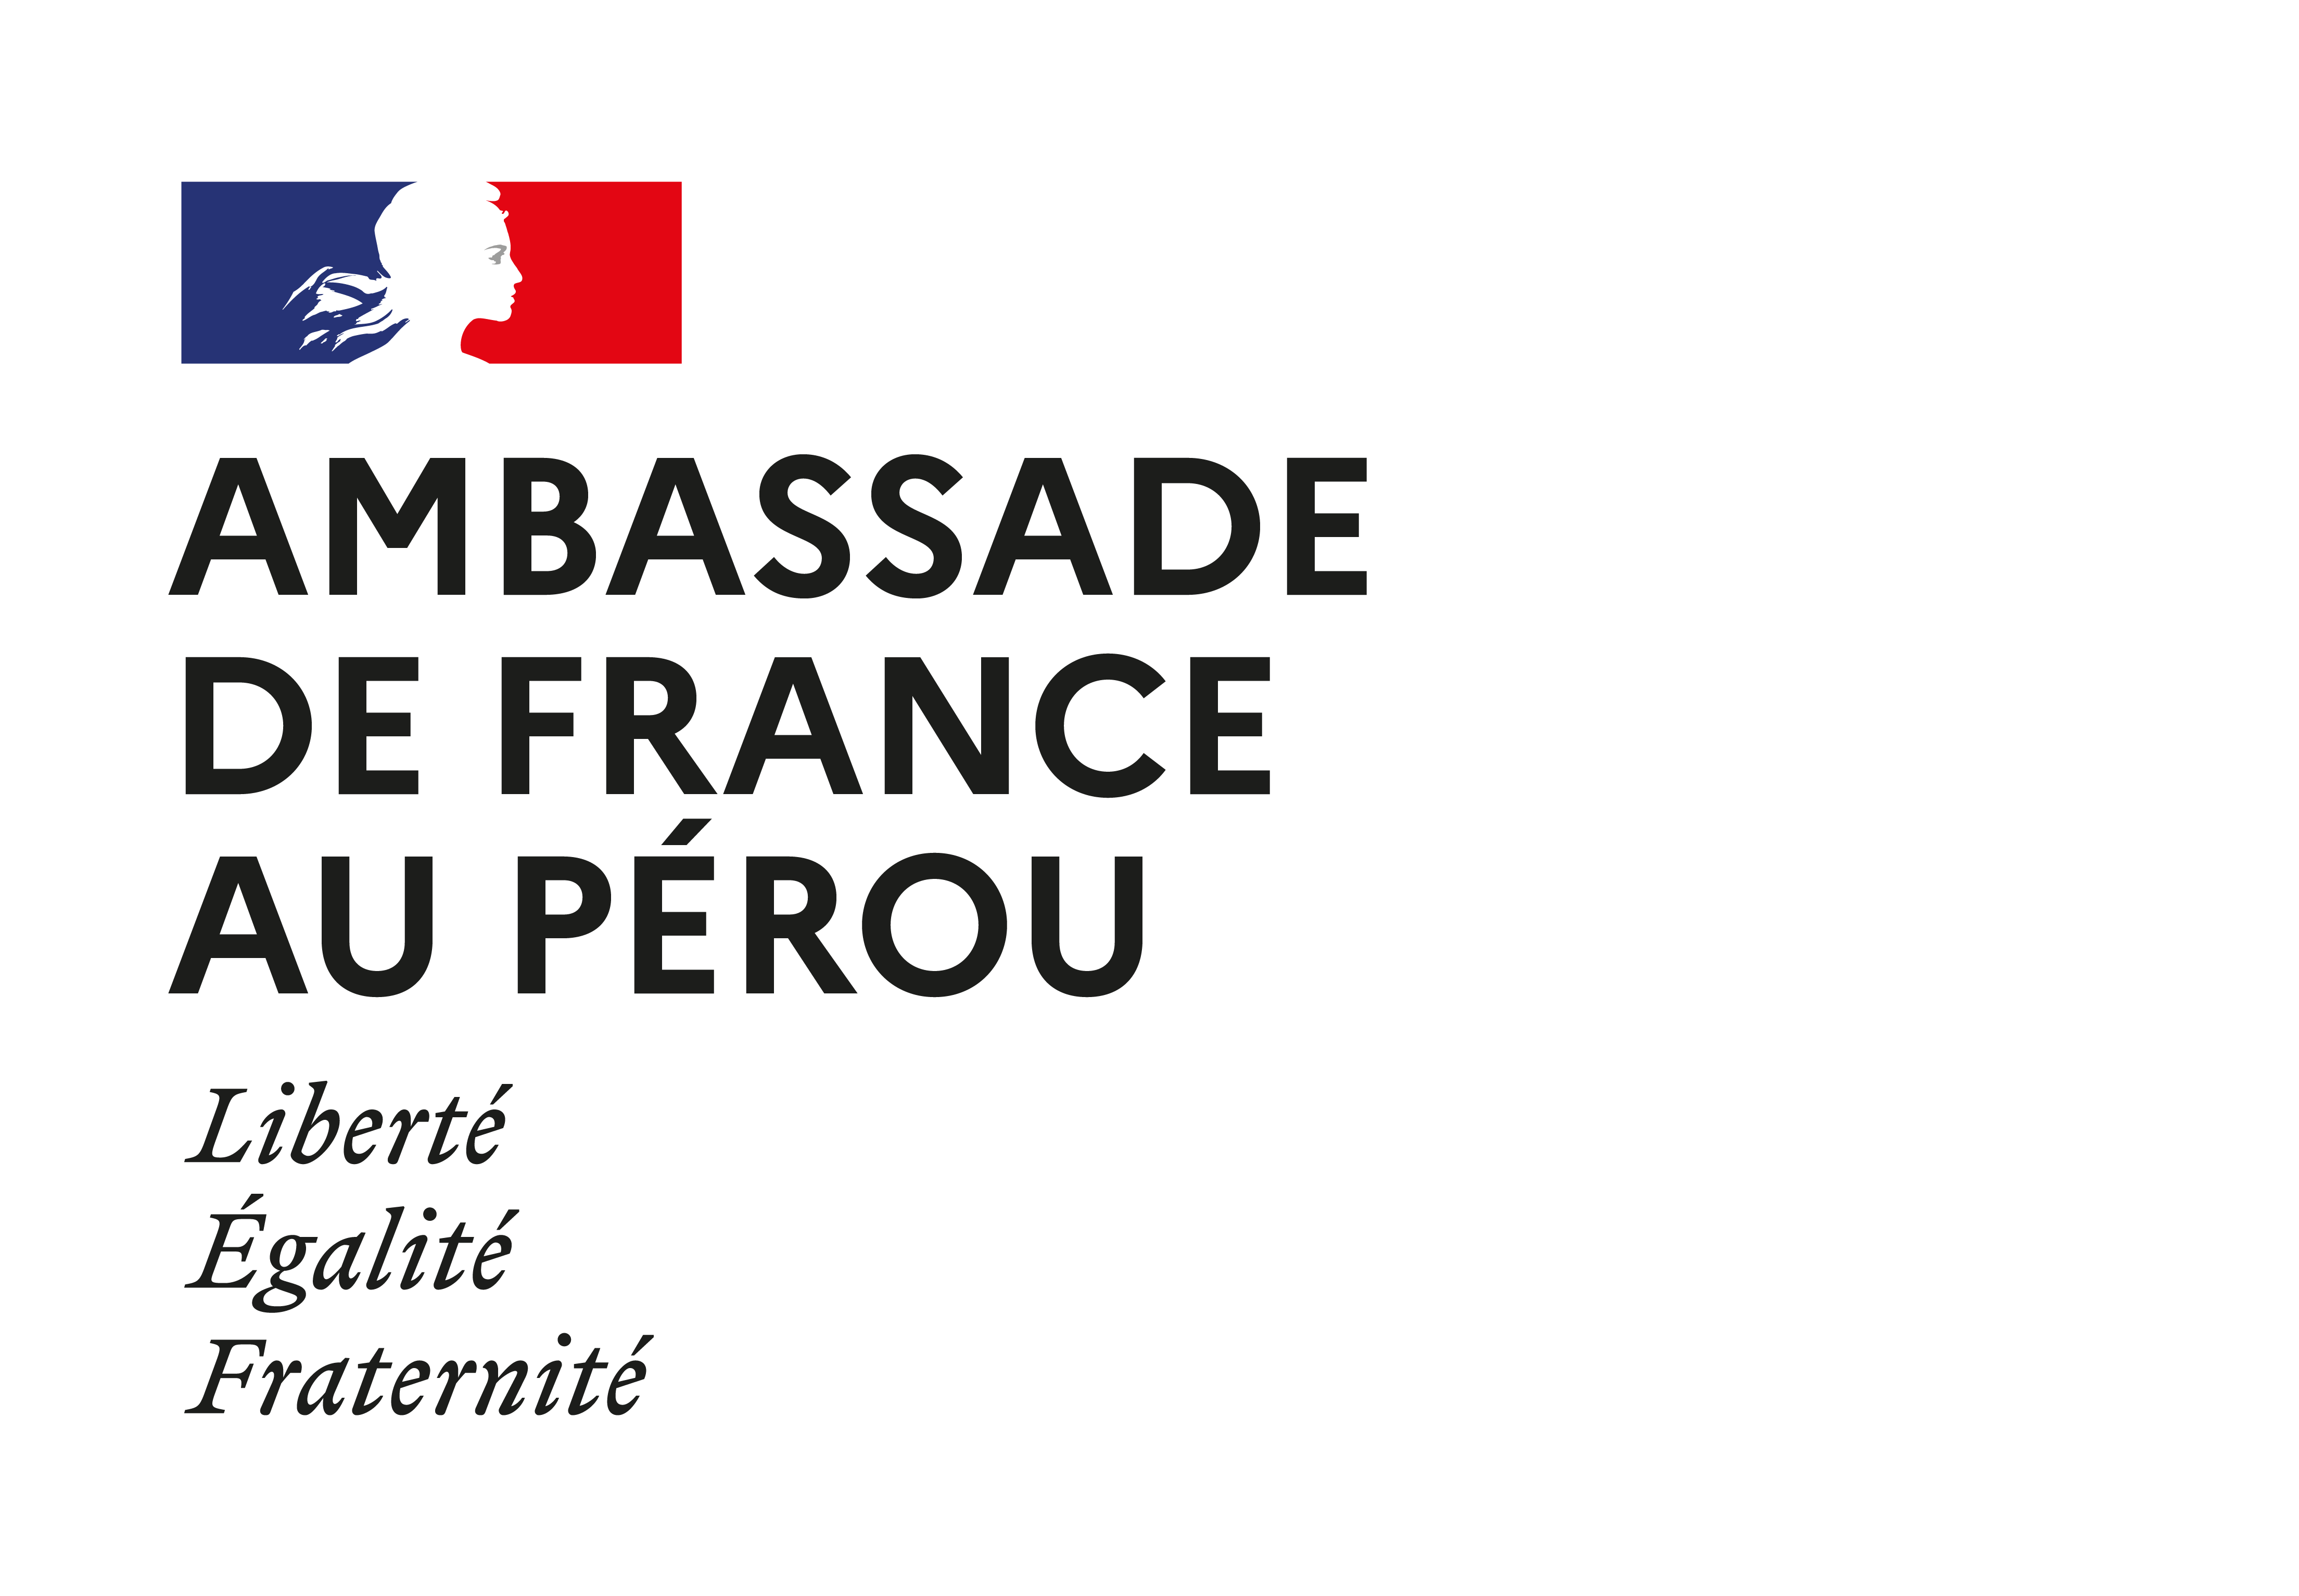 Ambassade de France Perou 